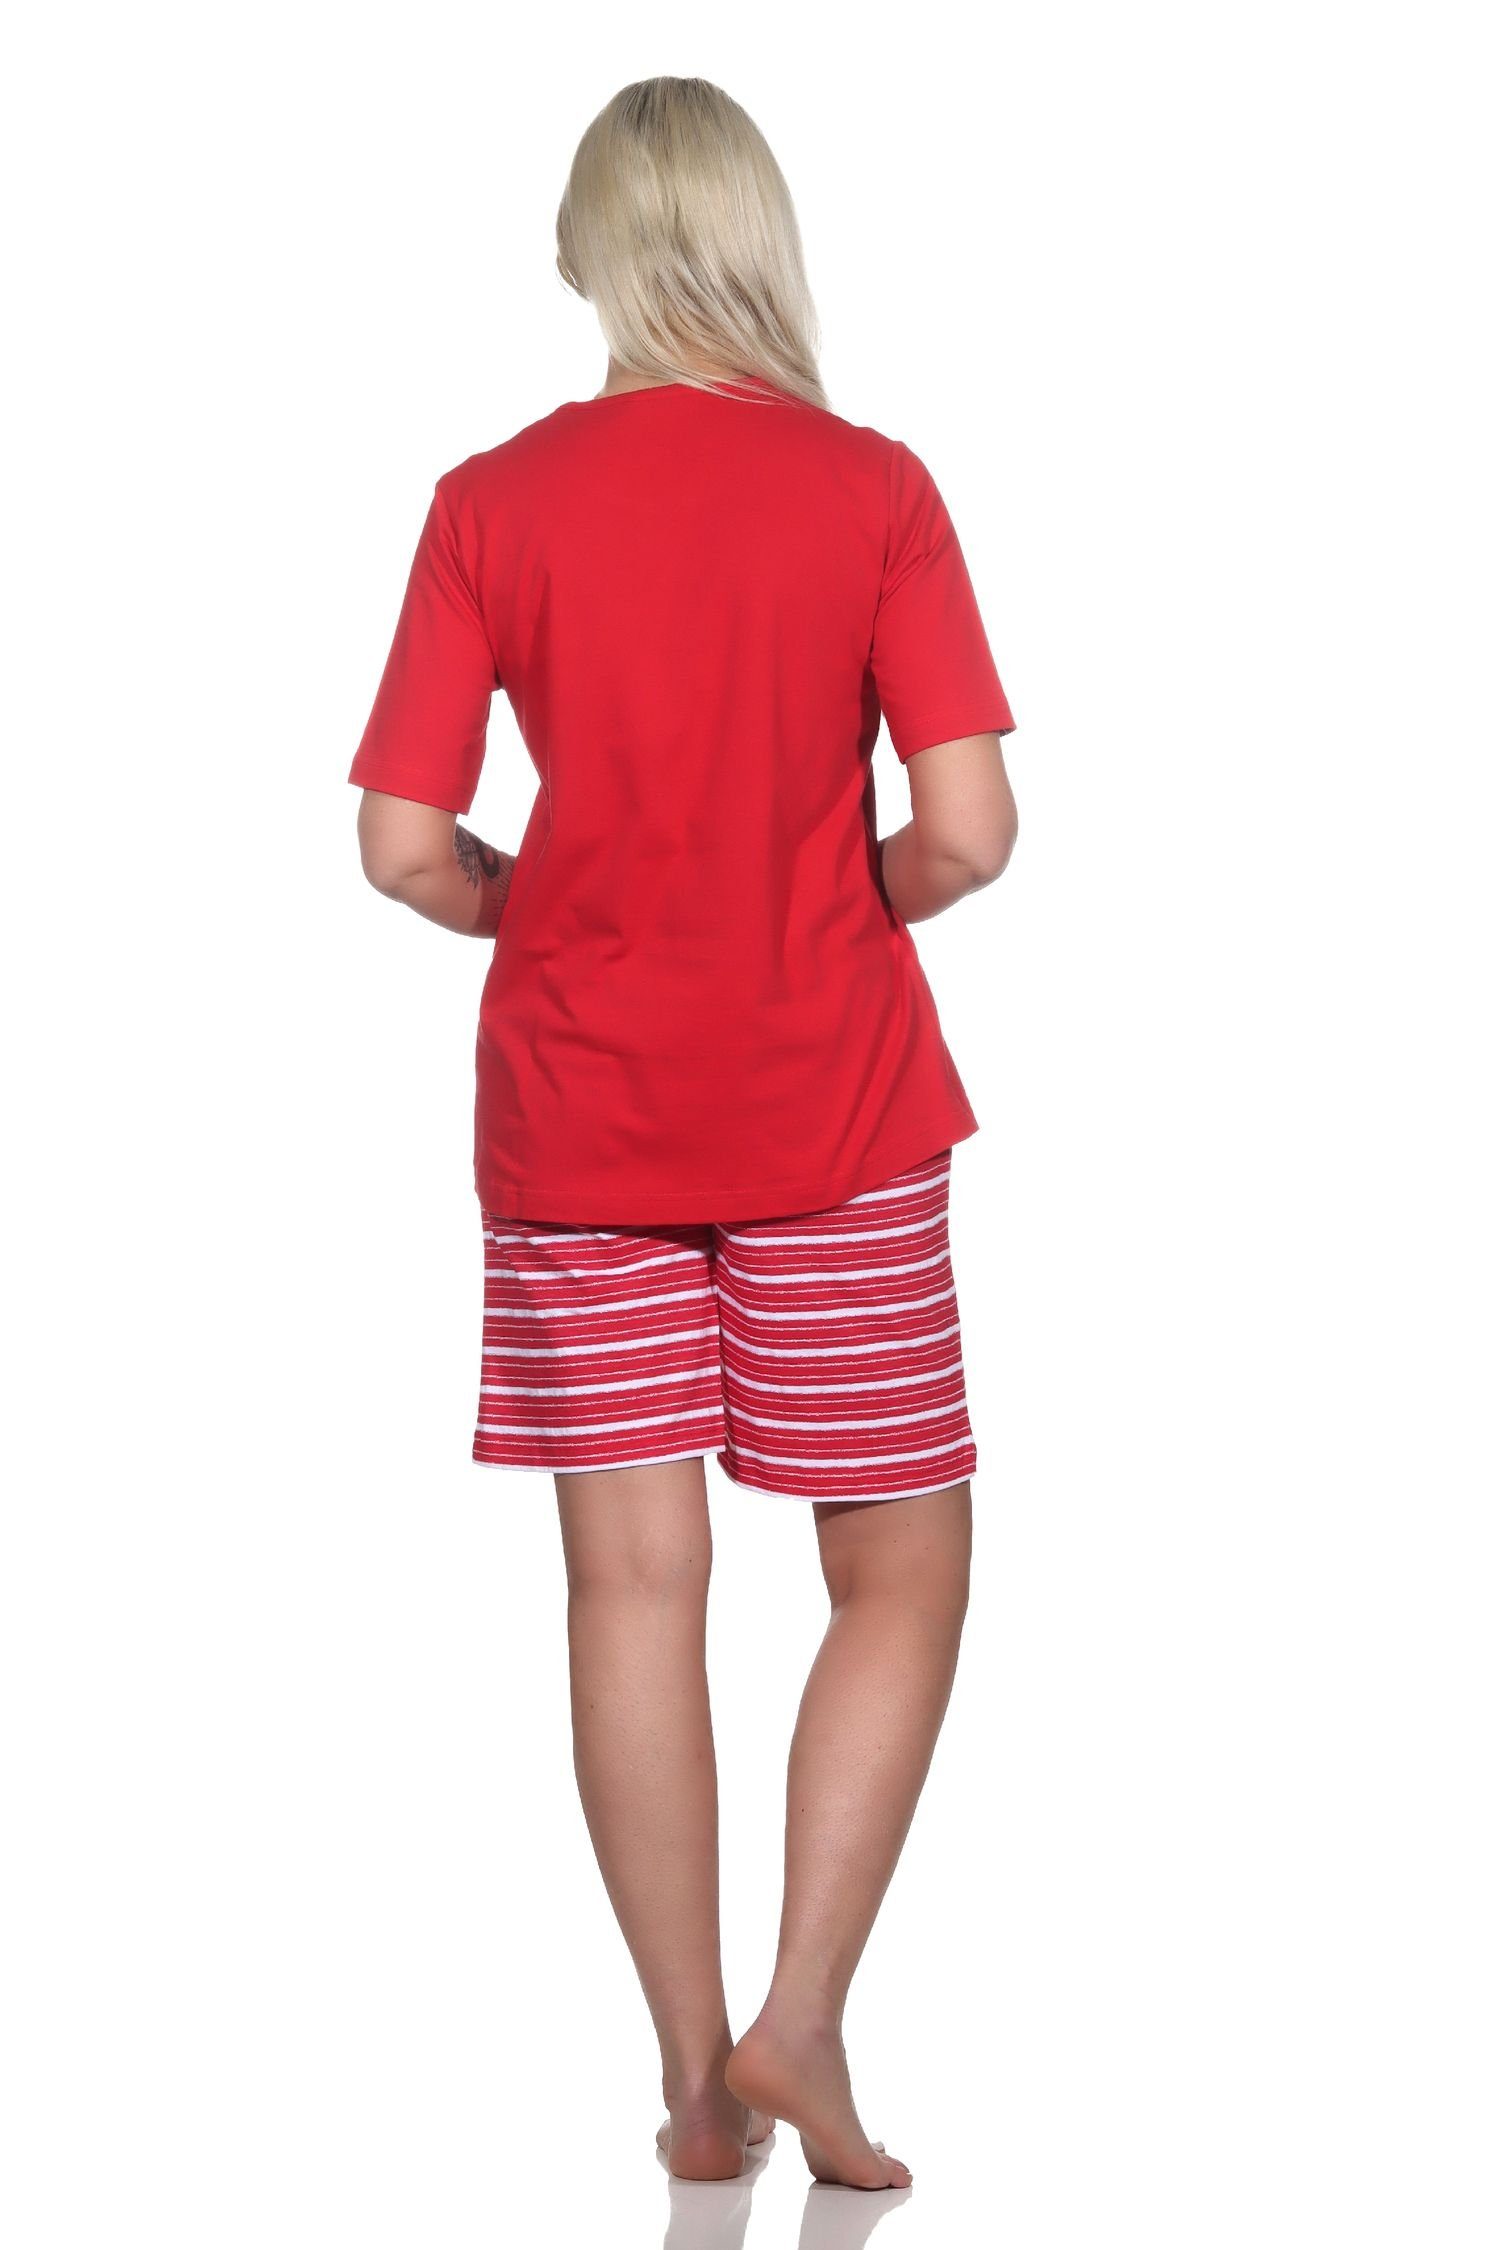 Leuchtturm Pyjama Motiv Damen Normann kurzarm Shorty Schlafanzug Maritimer als rot mit